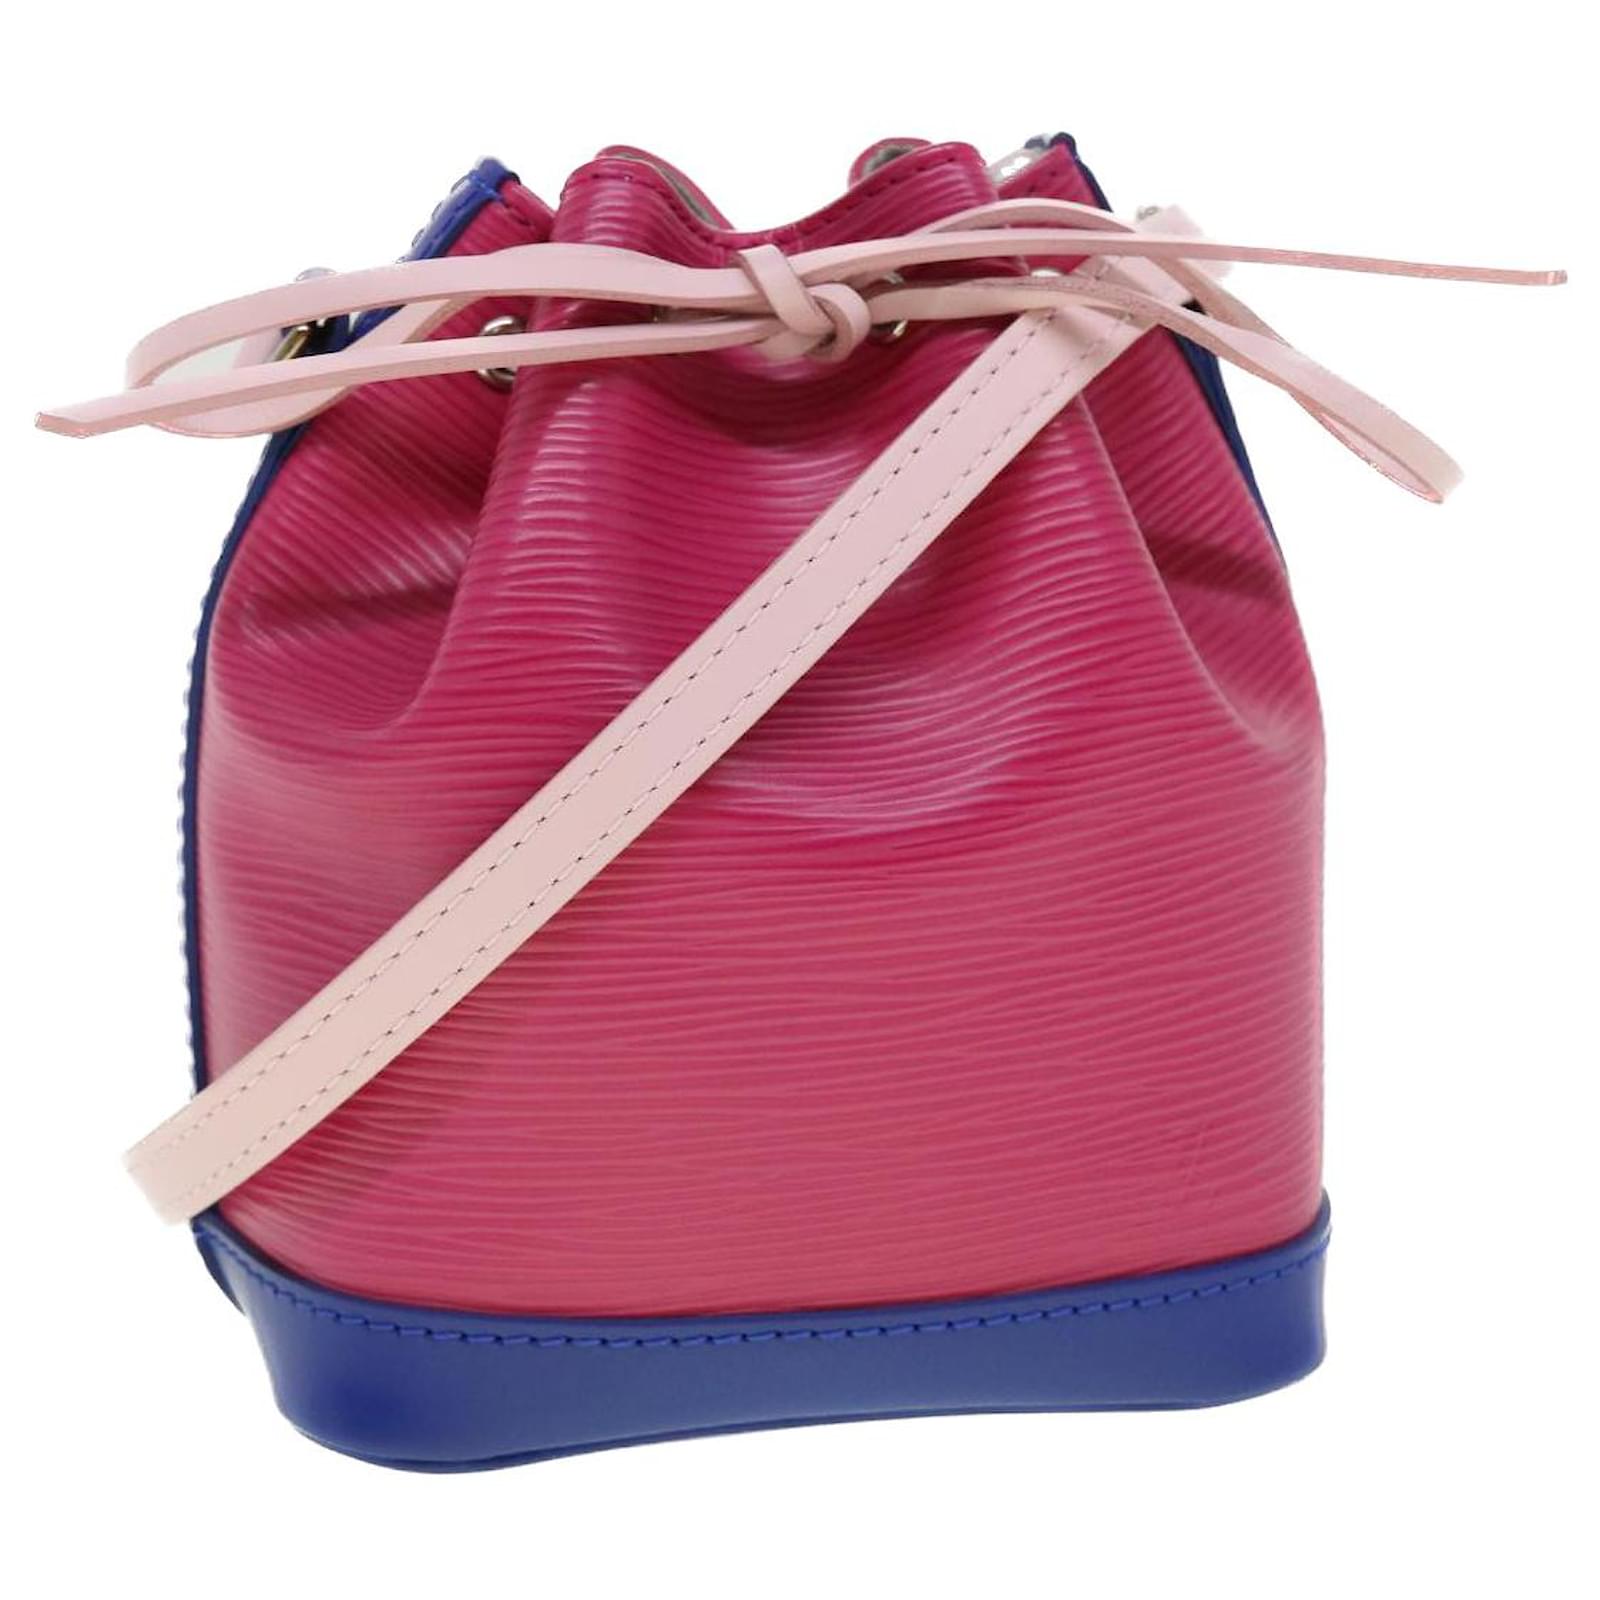 LOUIS VUITTON Epi Nano Noe Shoulder Bag Pink Blue Red M42502 LV